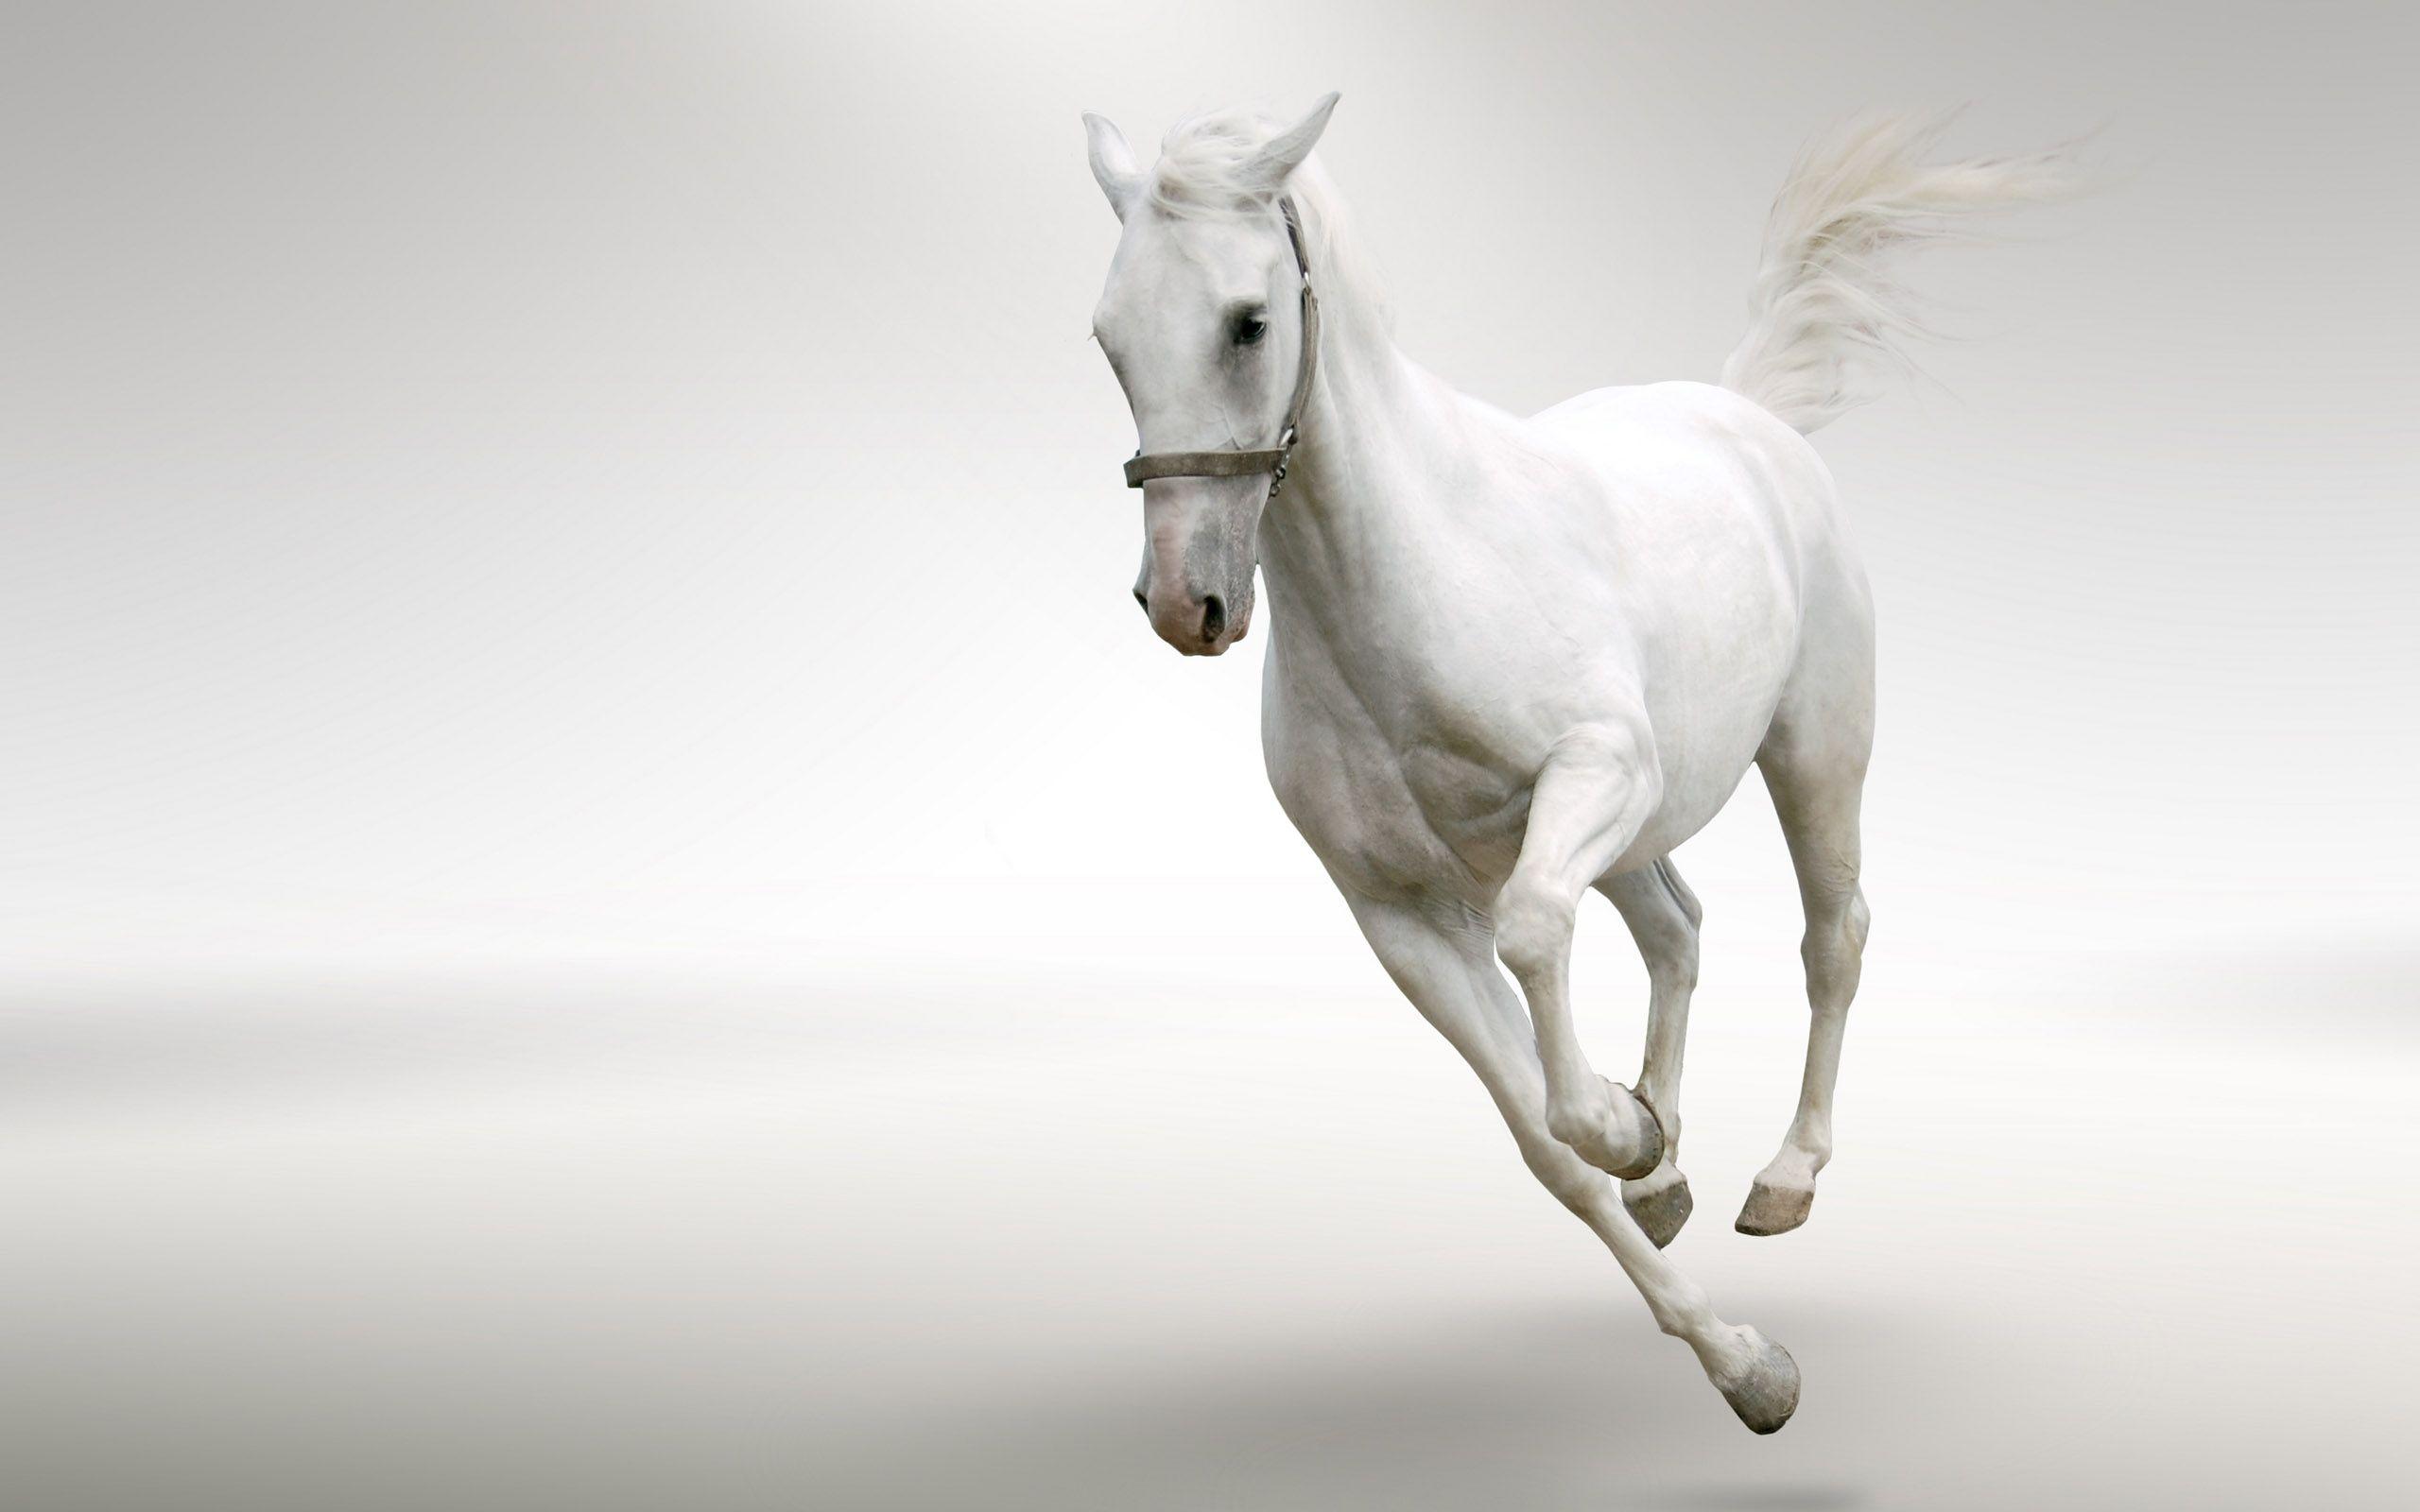 White horses, Horse wallpaper .com